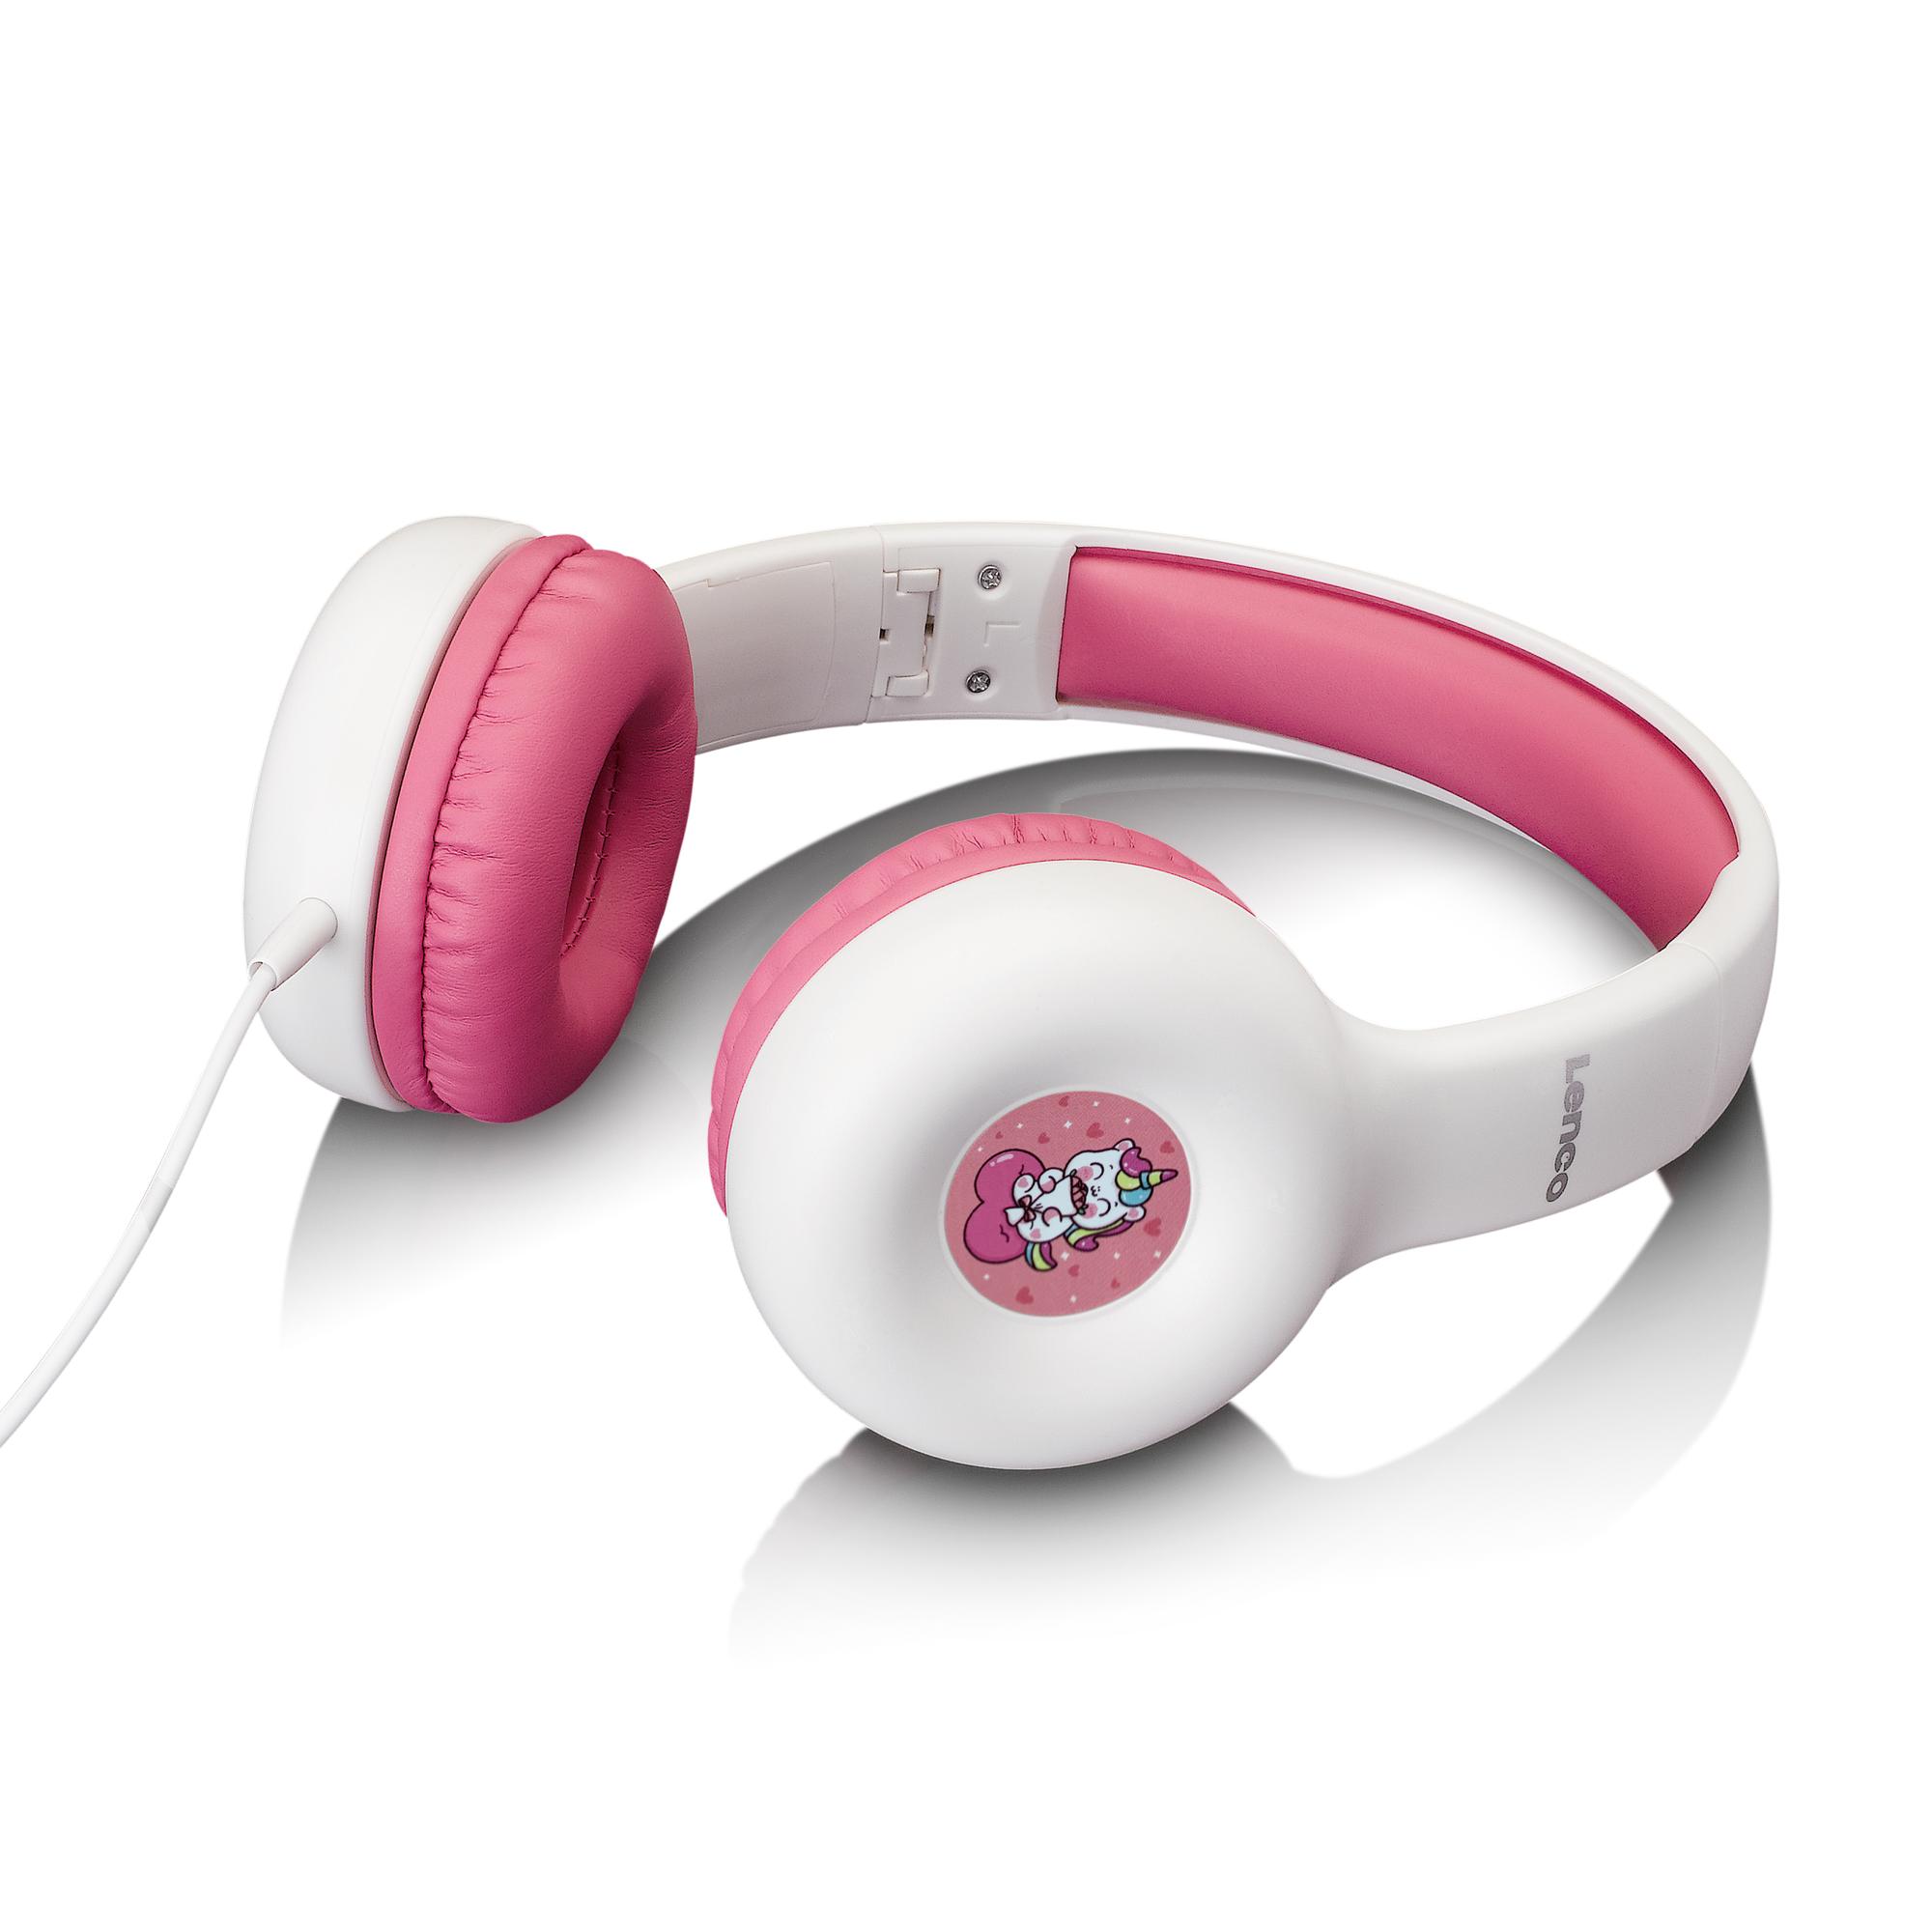 LENCO HP-010PK, Over-ear Kopfhörer Weiß-Pink